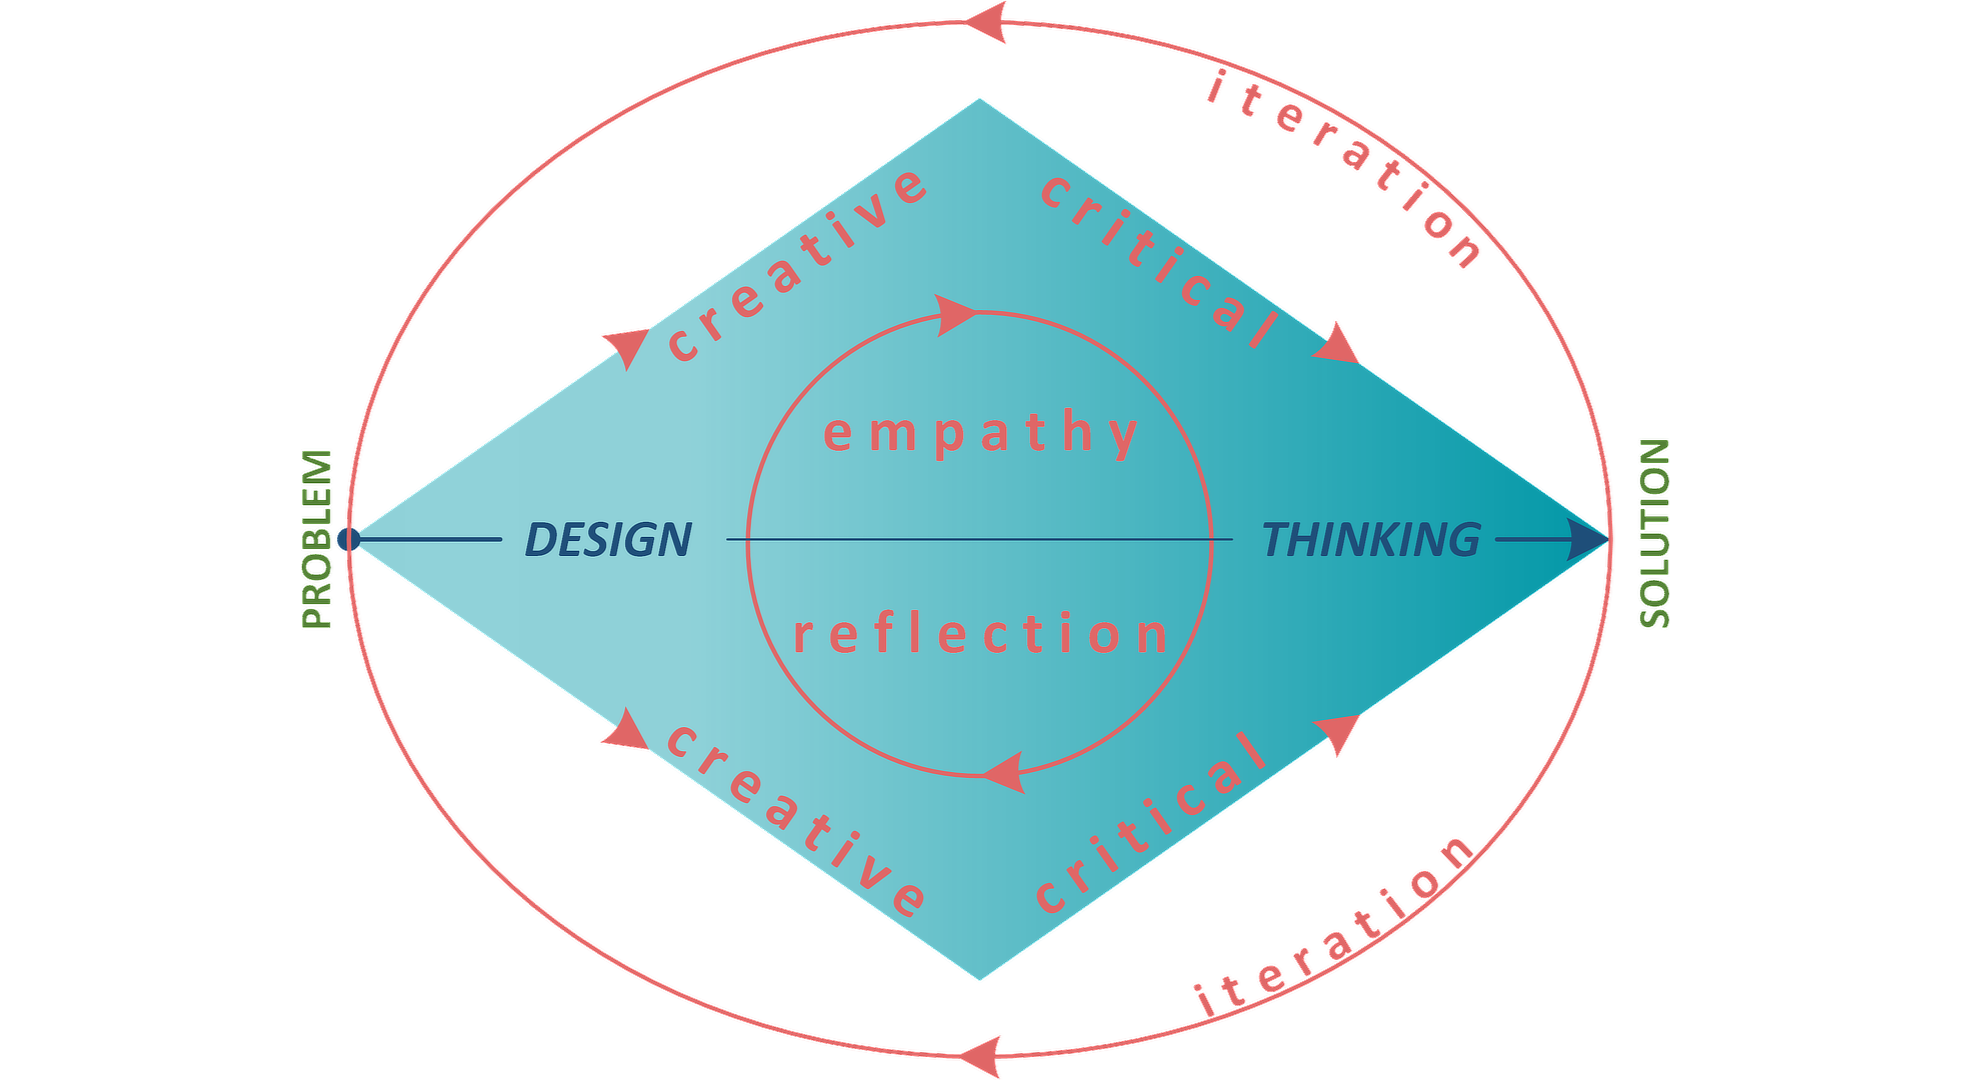 How a Design Thinking mindset improves employee performance